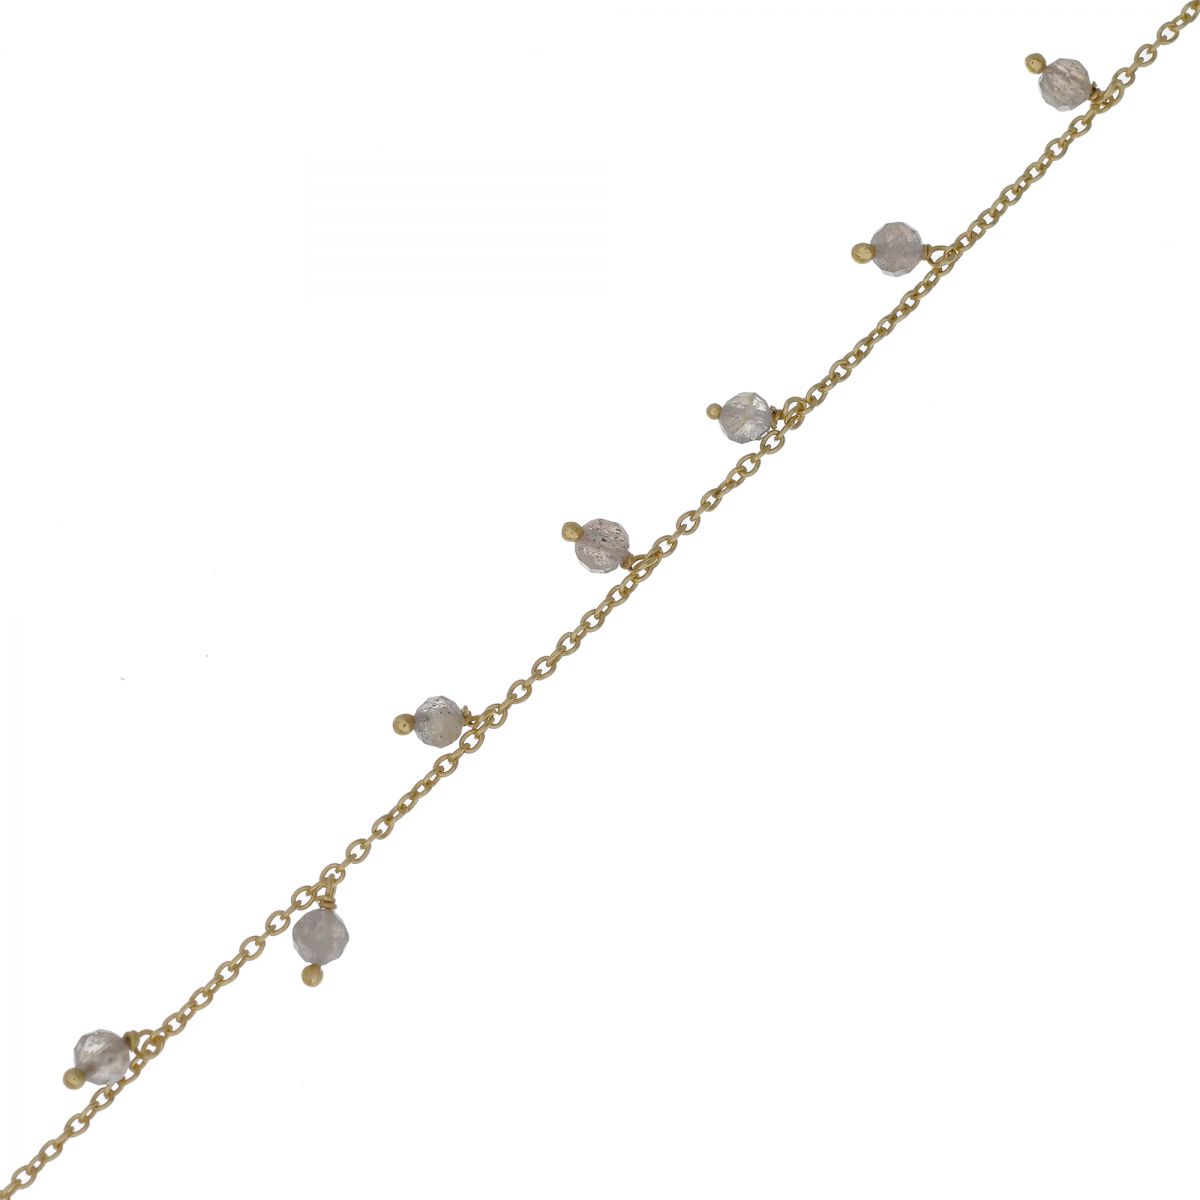 ff bracelet 3mm 8 pendants labradorite beads gold plated